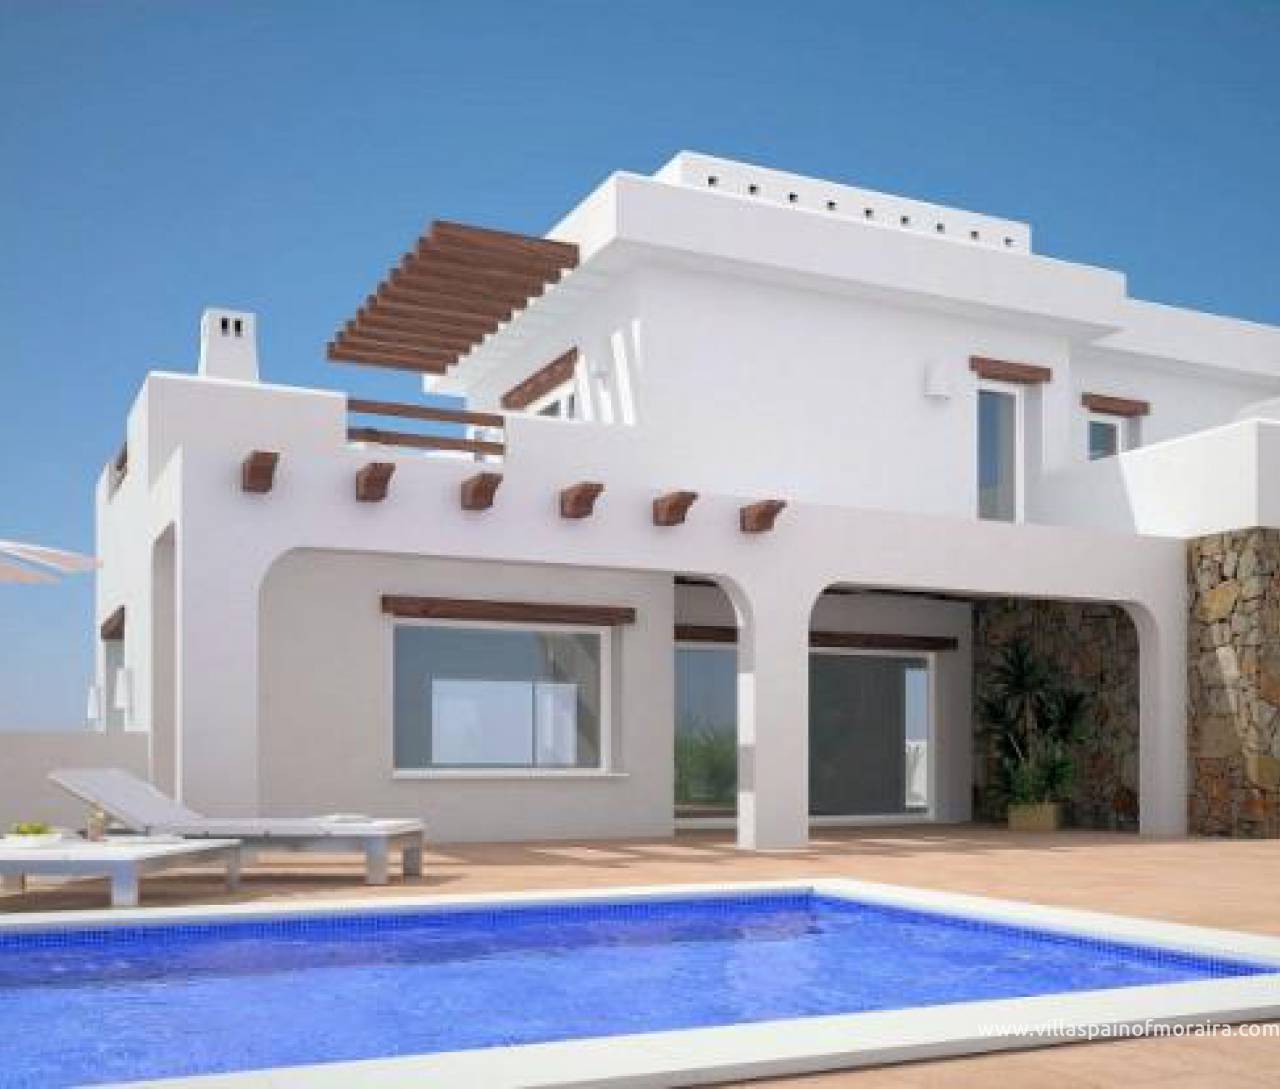 New build villa model costa Blanca